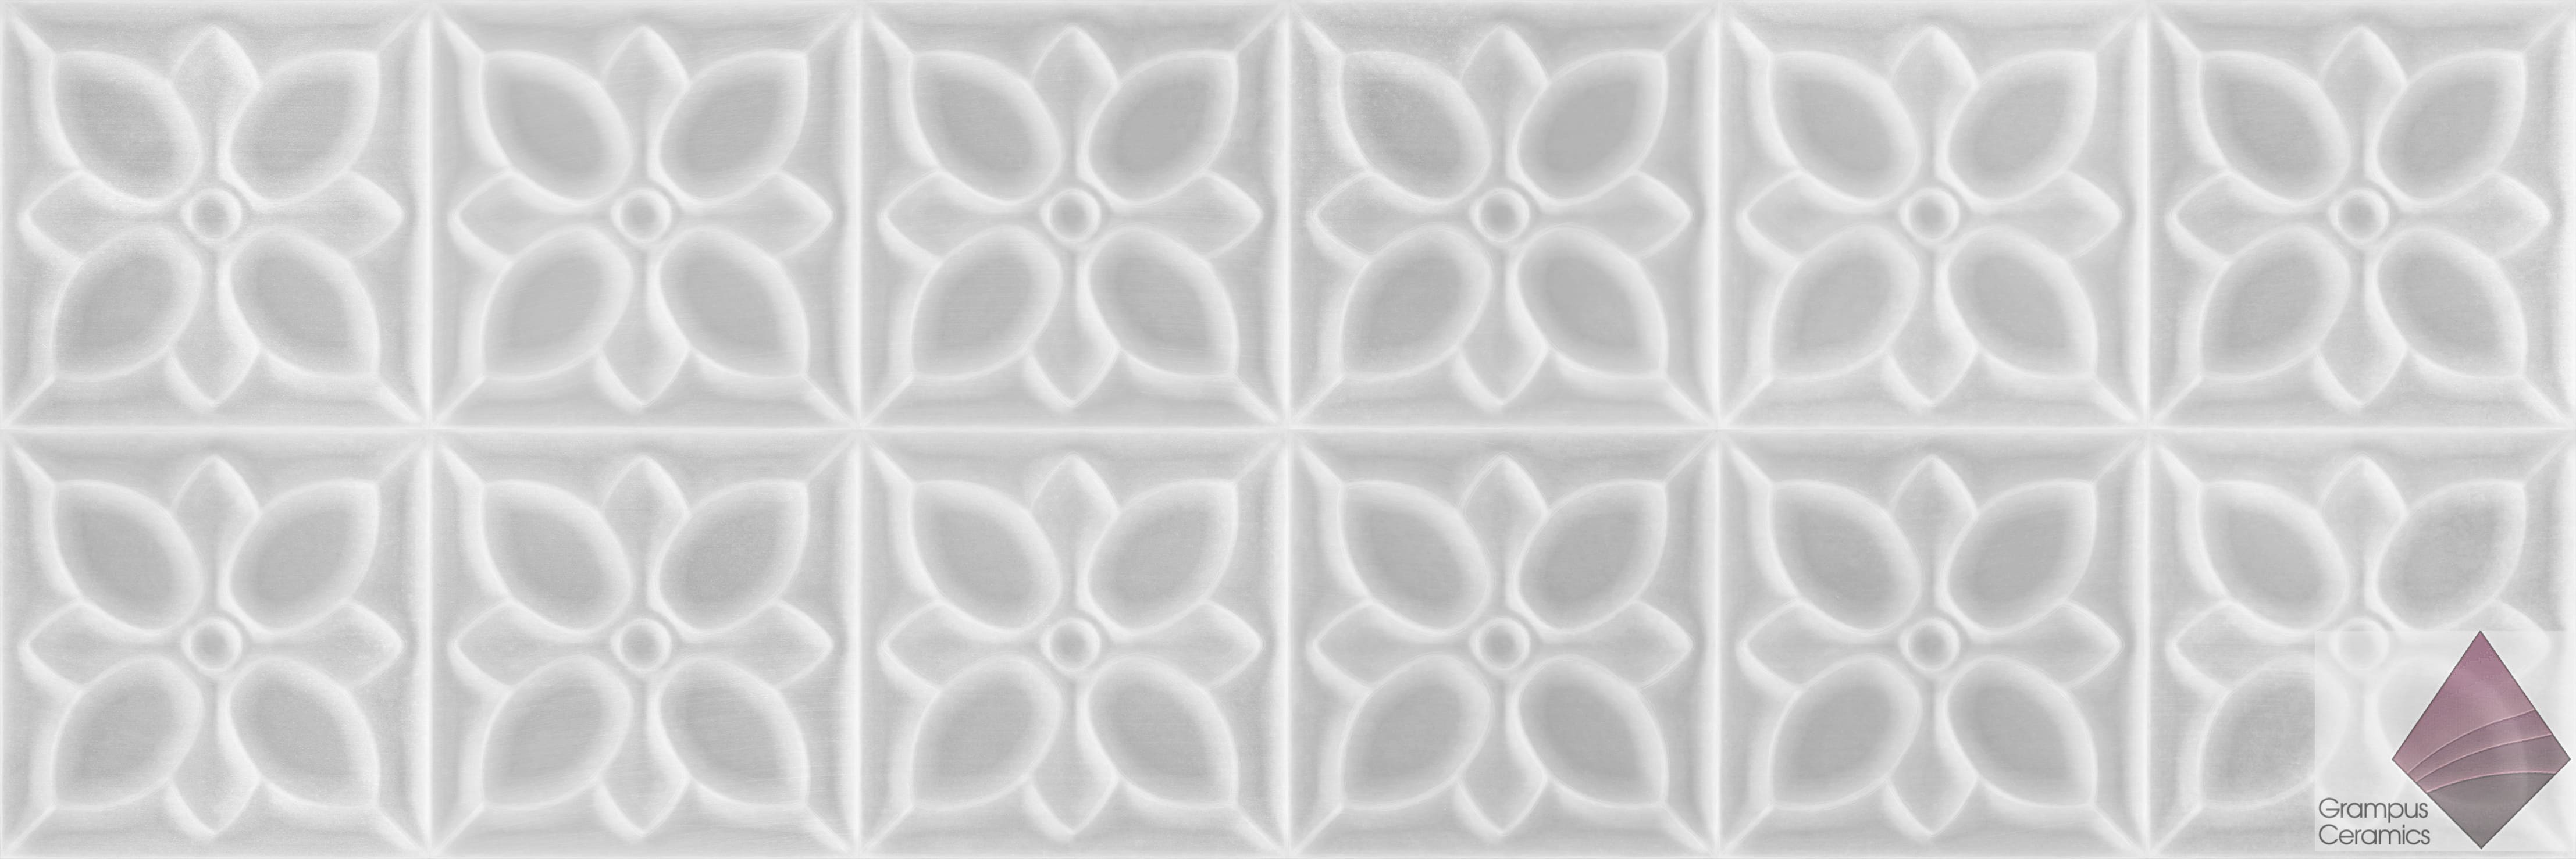 Глянцевая плитка для ванной Mei Keramik Lissabon квадраты серый рельеф 25х75